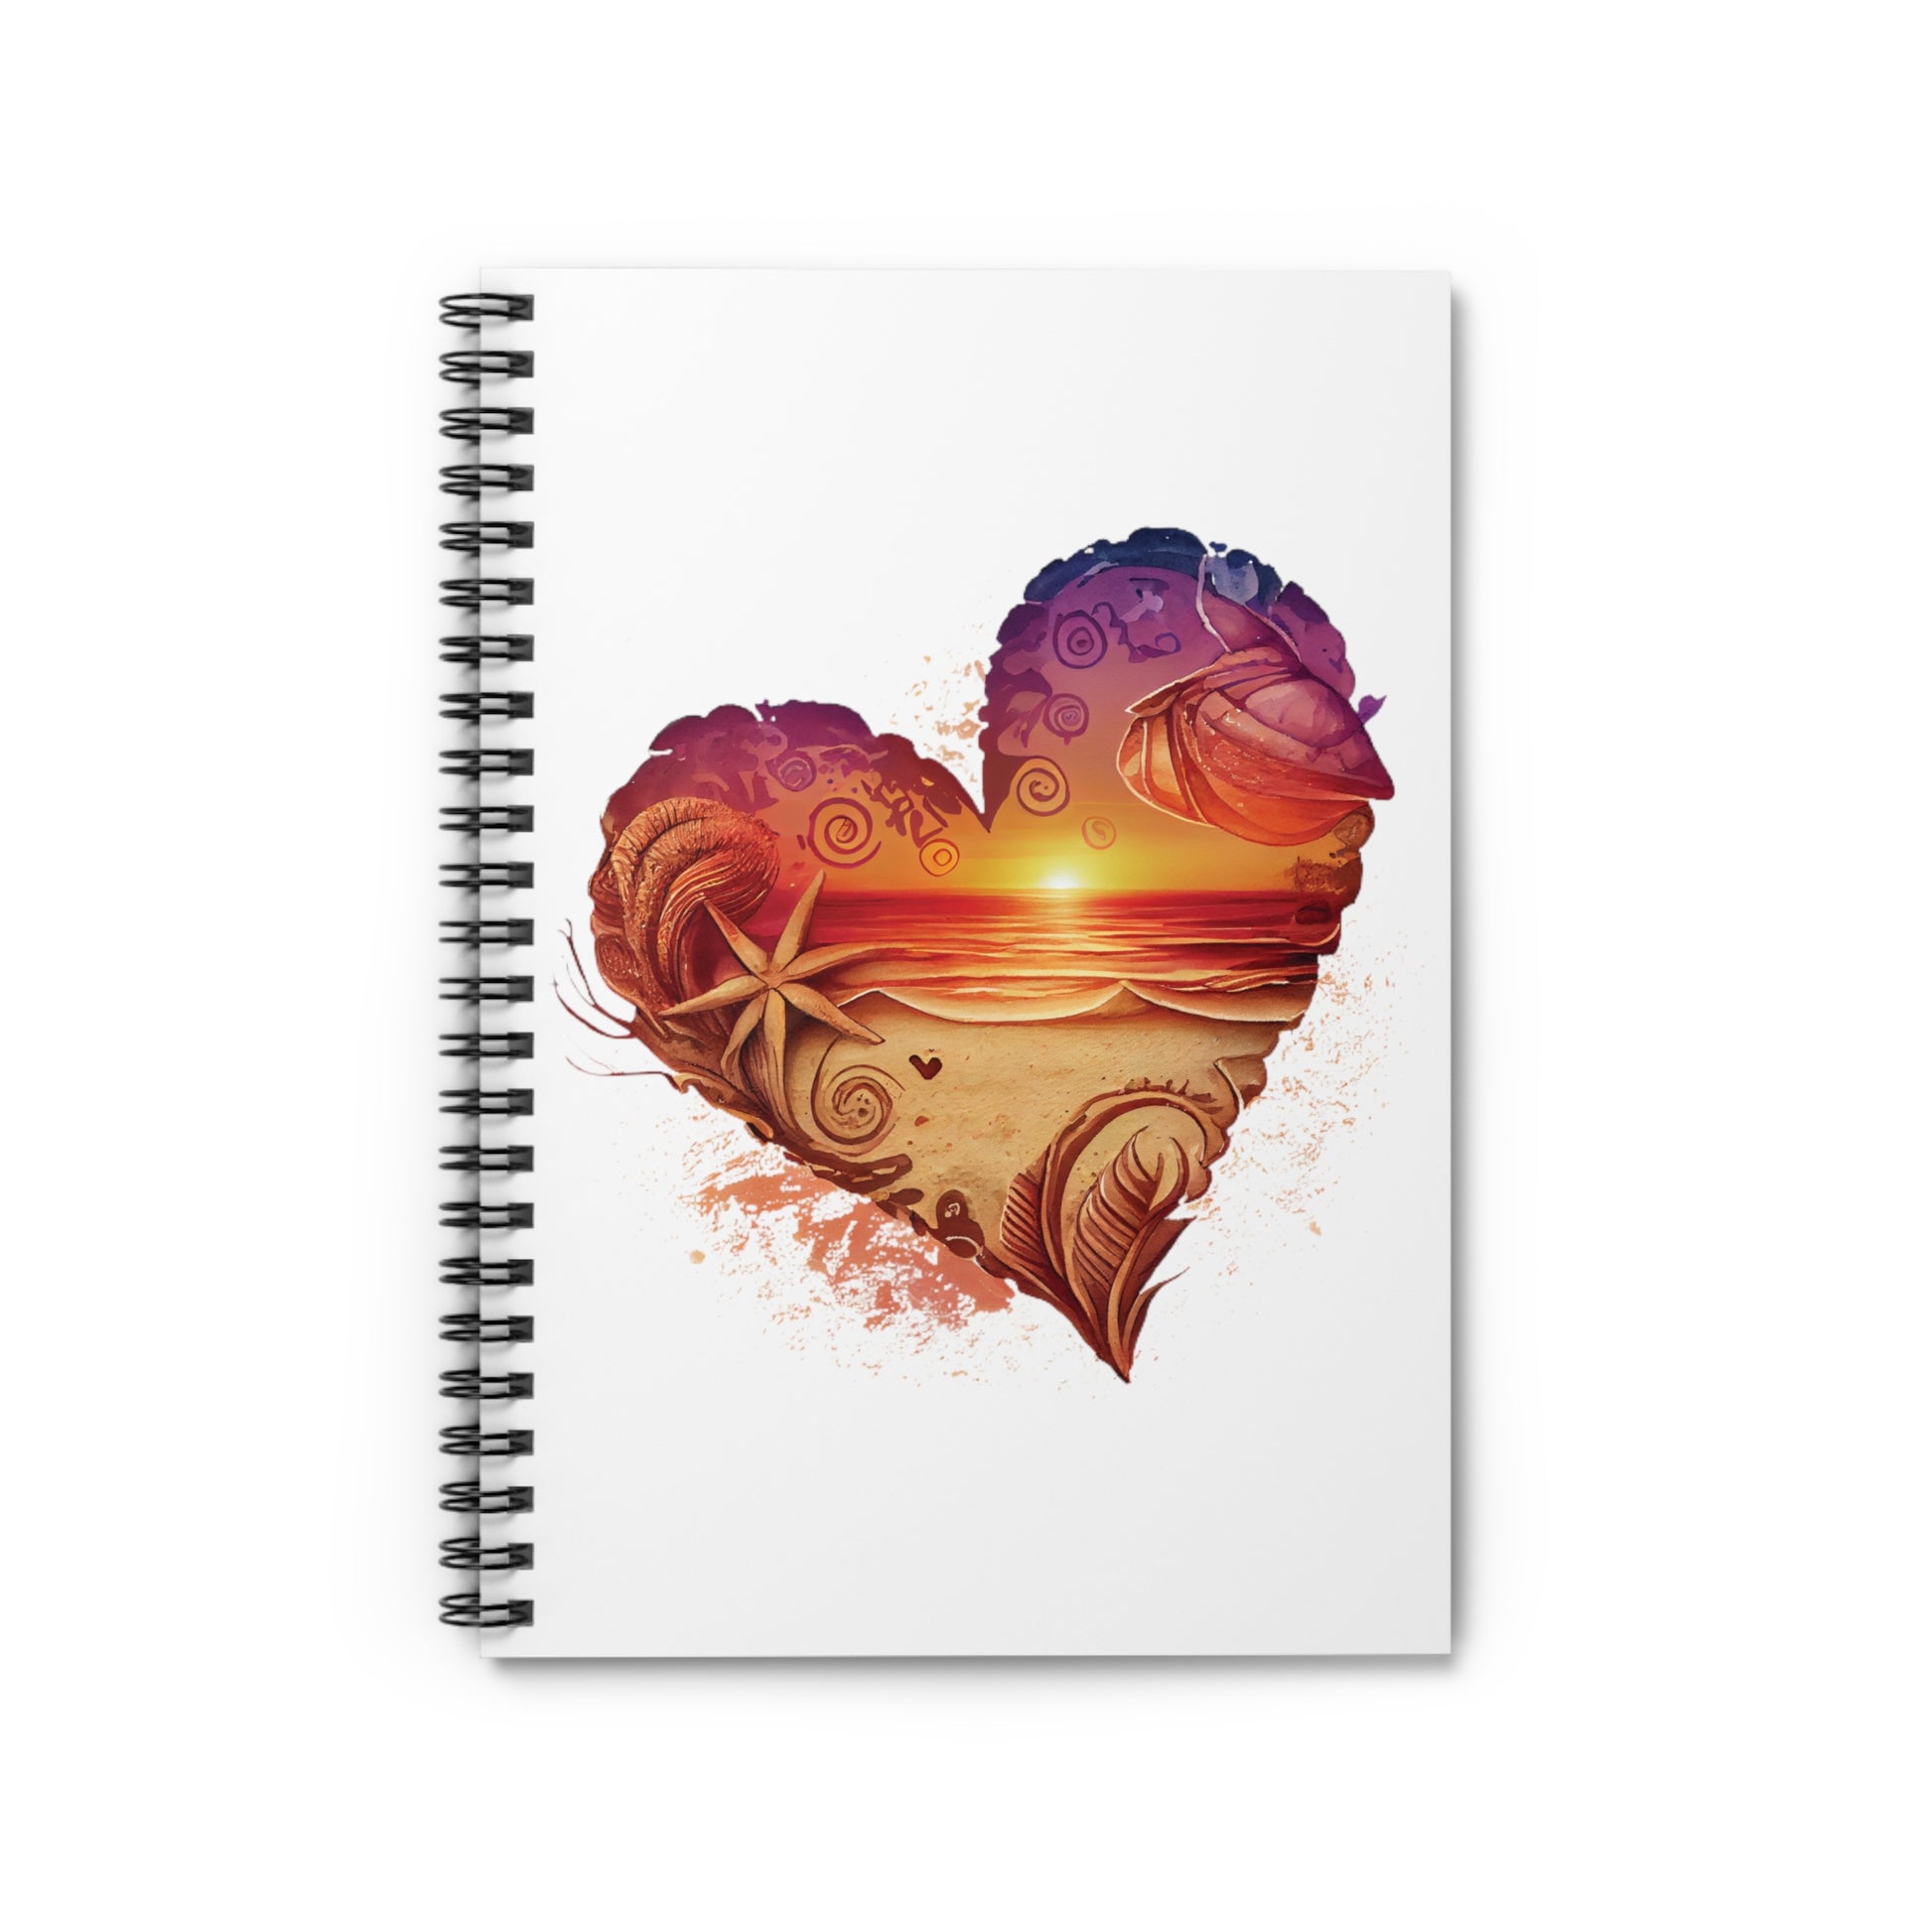 Beach Heart Sunset: Spiral Notebook - Log Books - Journals - Diaries - and More Custom Printed by TheGlassyLass